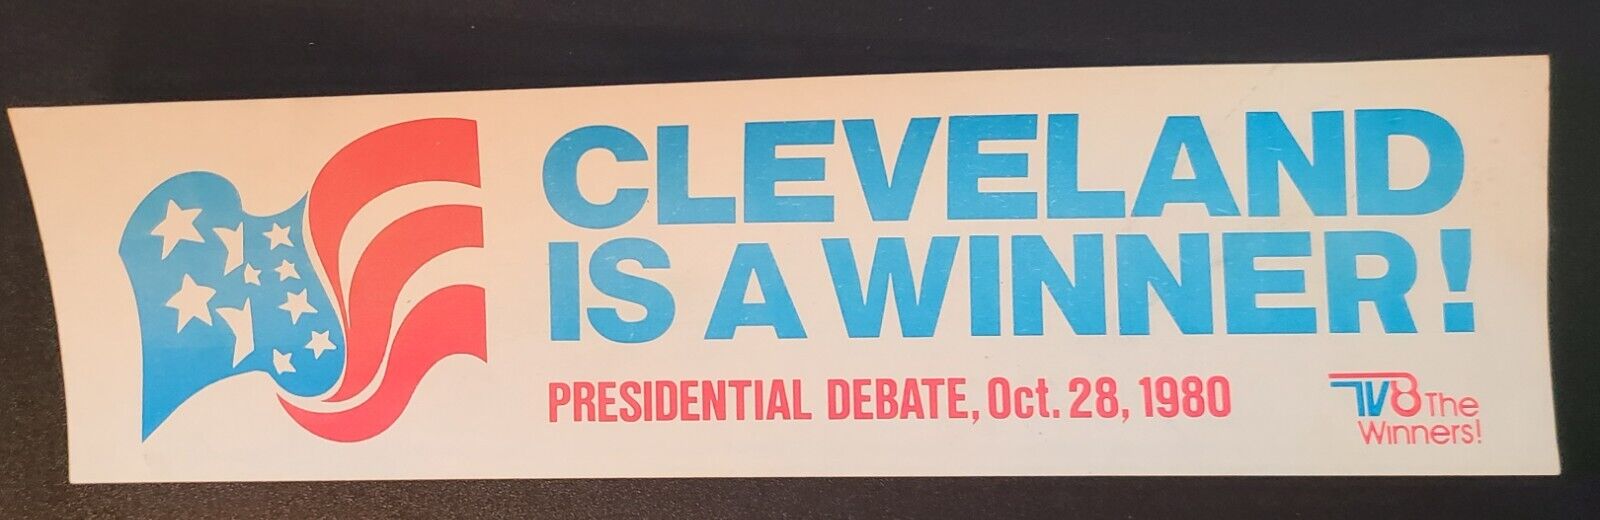 bumper sticker Cleveland Is A Winner Presidential Debate OCT 28 980 TV8 11\